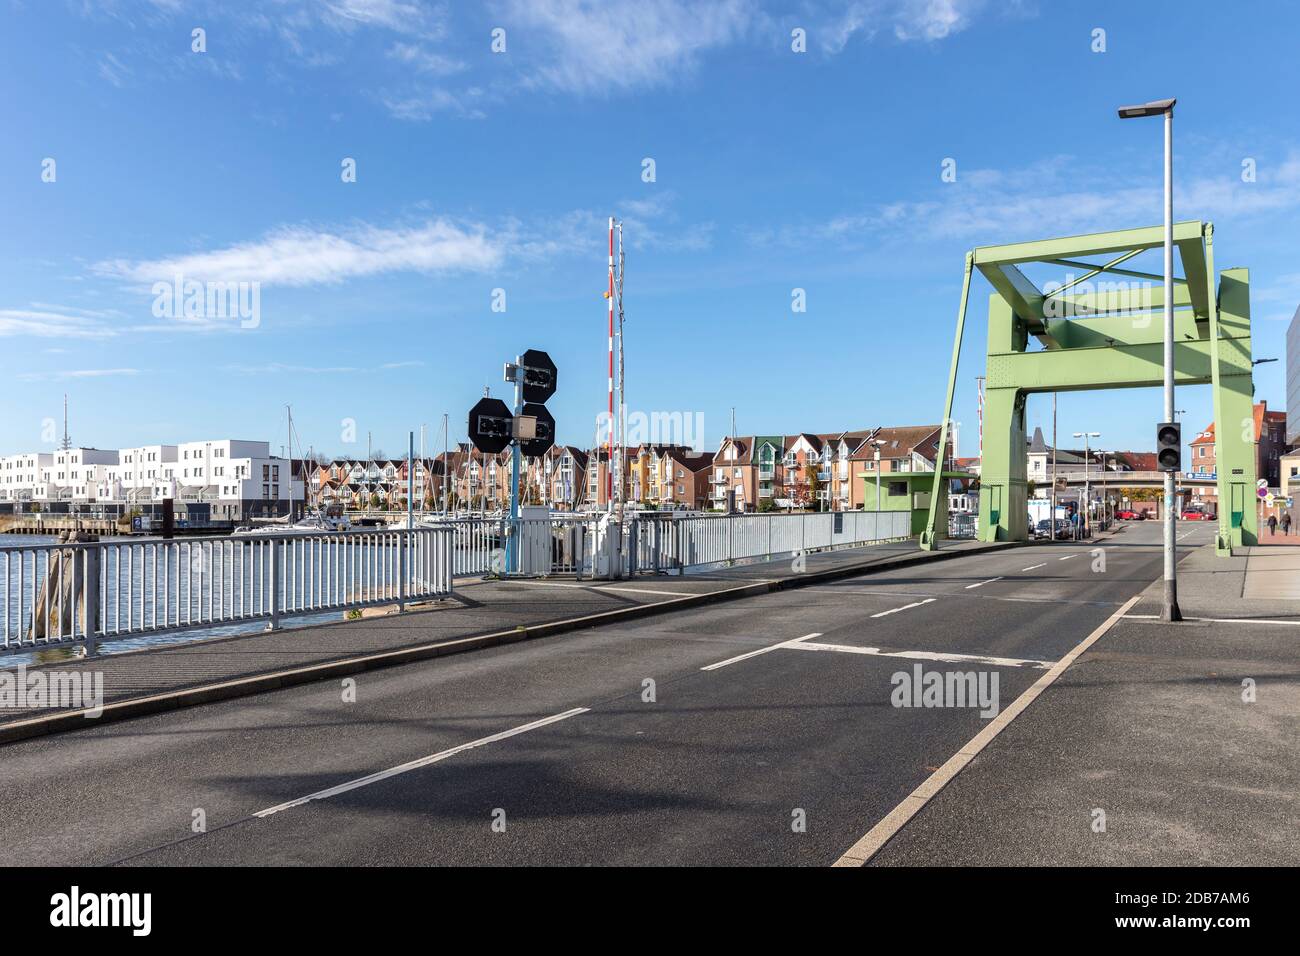 bascule bridge in Cuxhaven, Germany Stock Photo